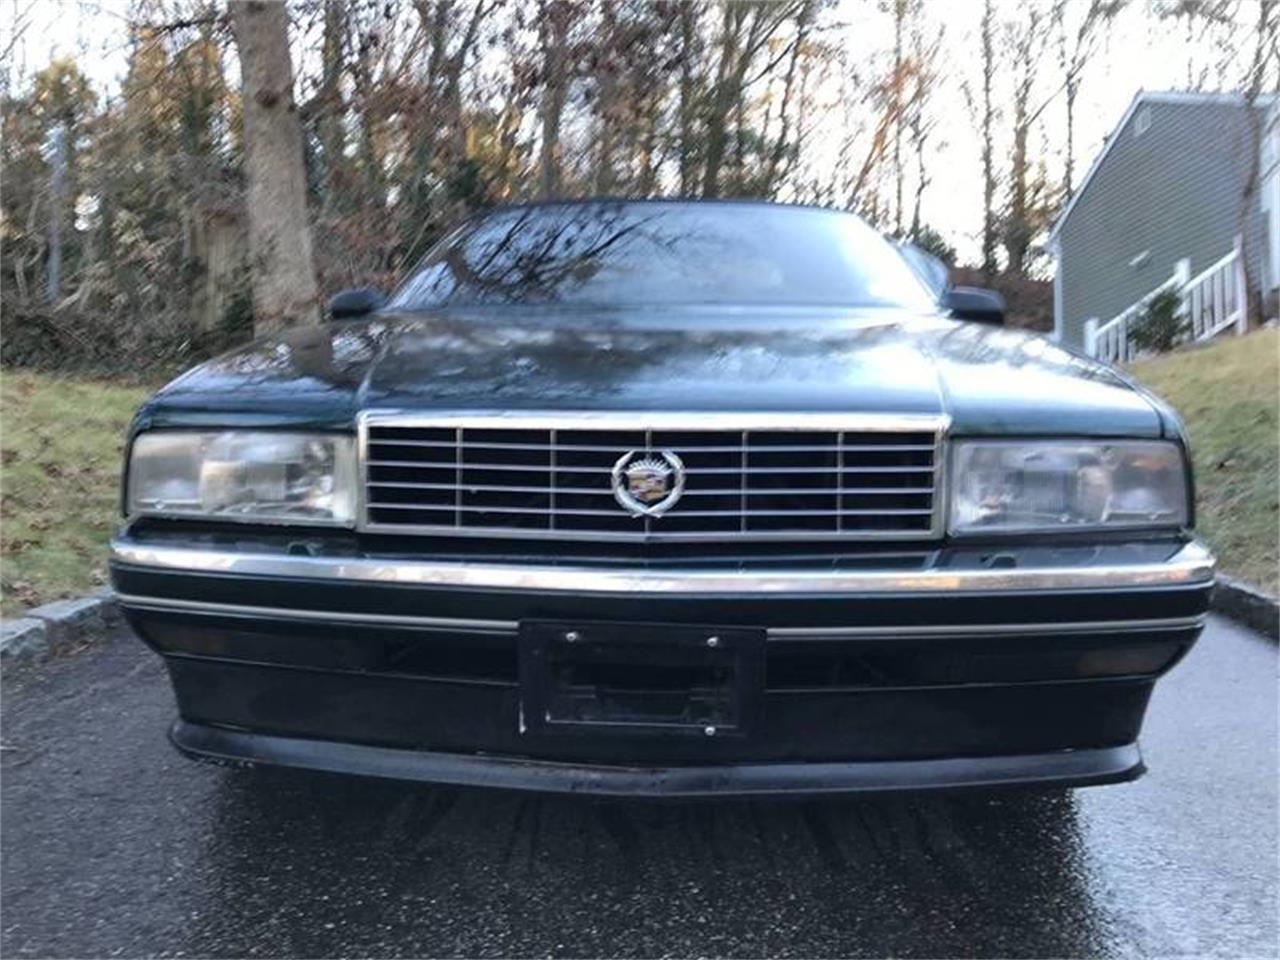 1993 Cadillac DeVille for Sale | ClassicCars.com | CC-1198914